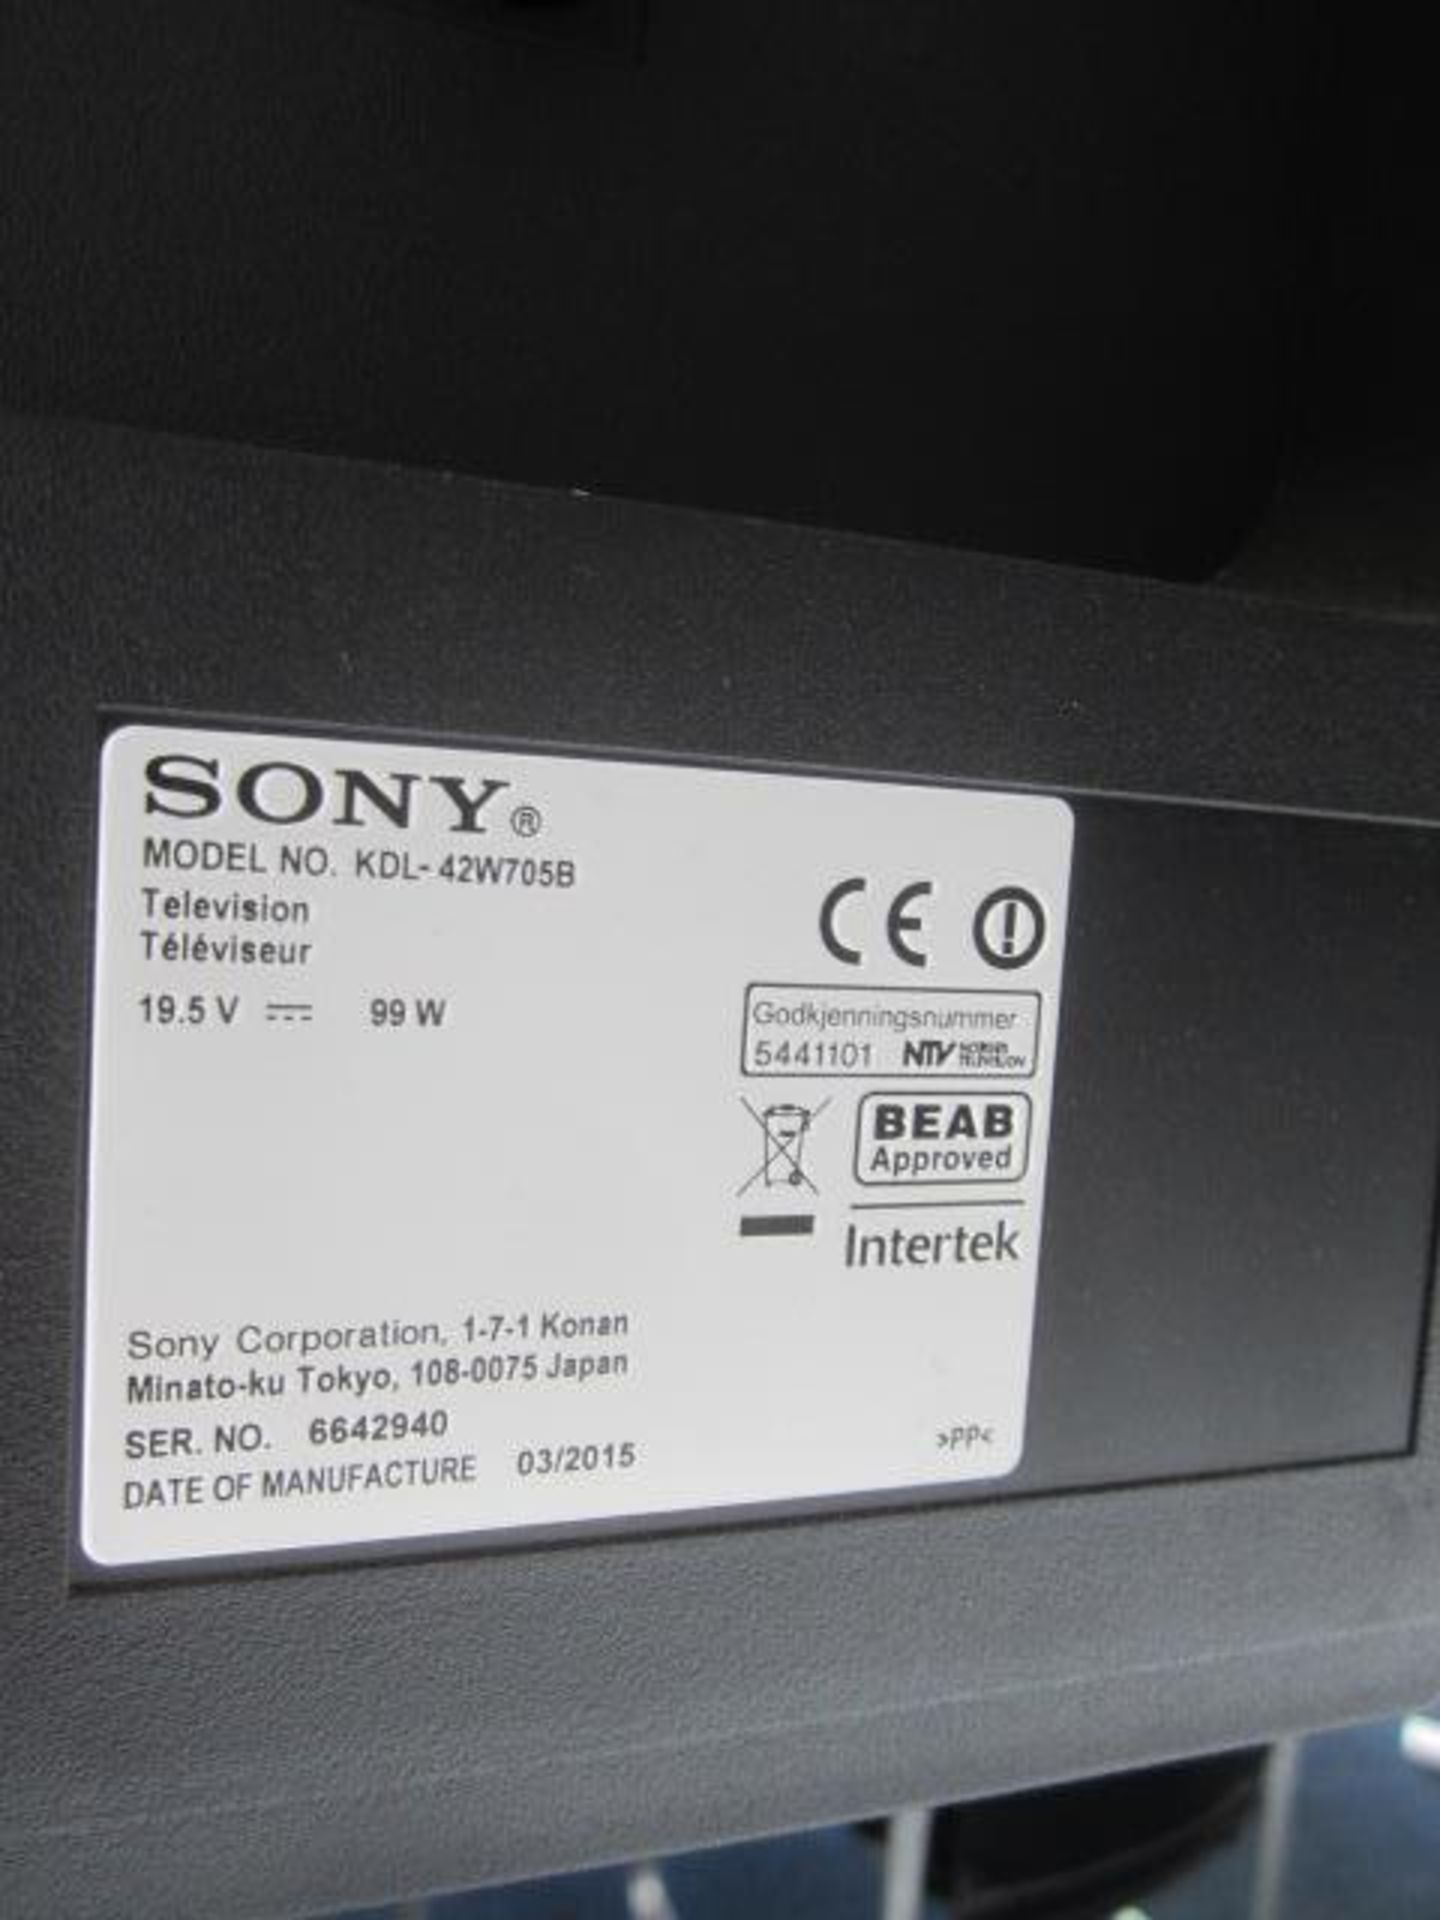 Sony Wall mounted monitor, model KDL-42W705B, Fujitsu computer tower and keyboard - Image 3 of 4